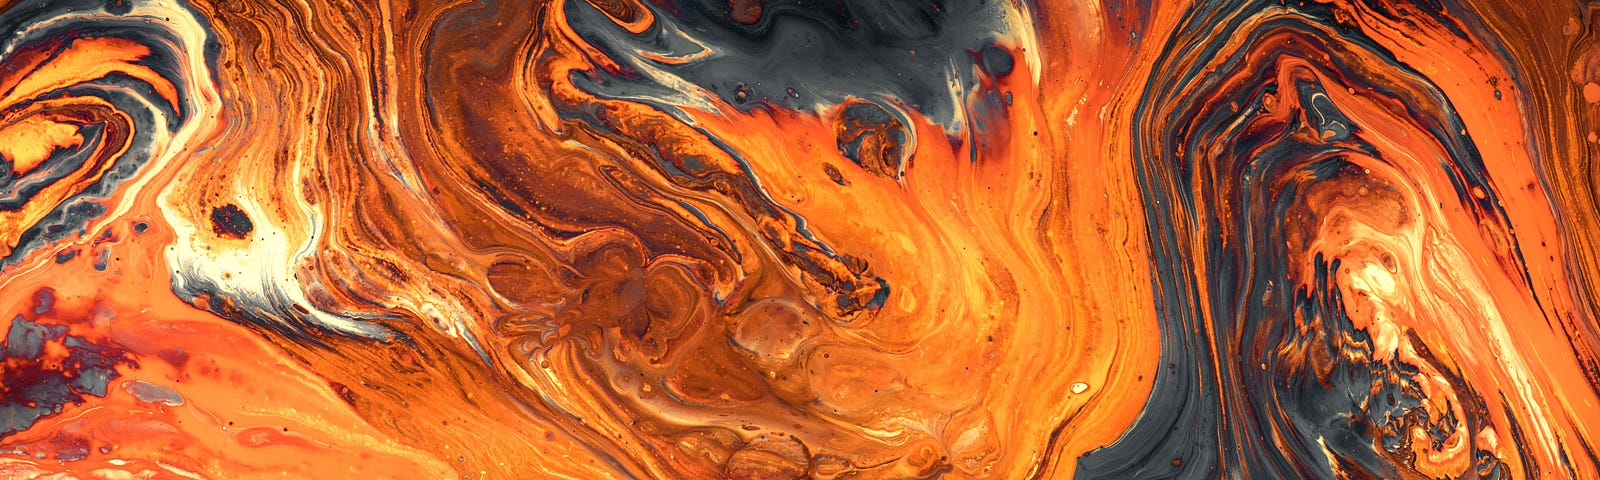 an image of orange, yellow and black swirls of paint